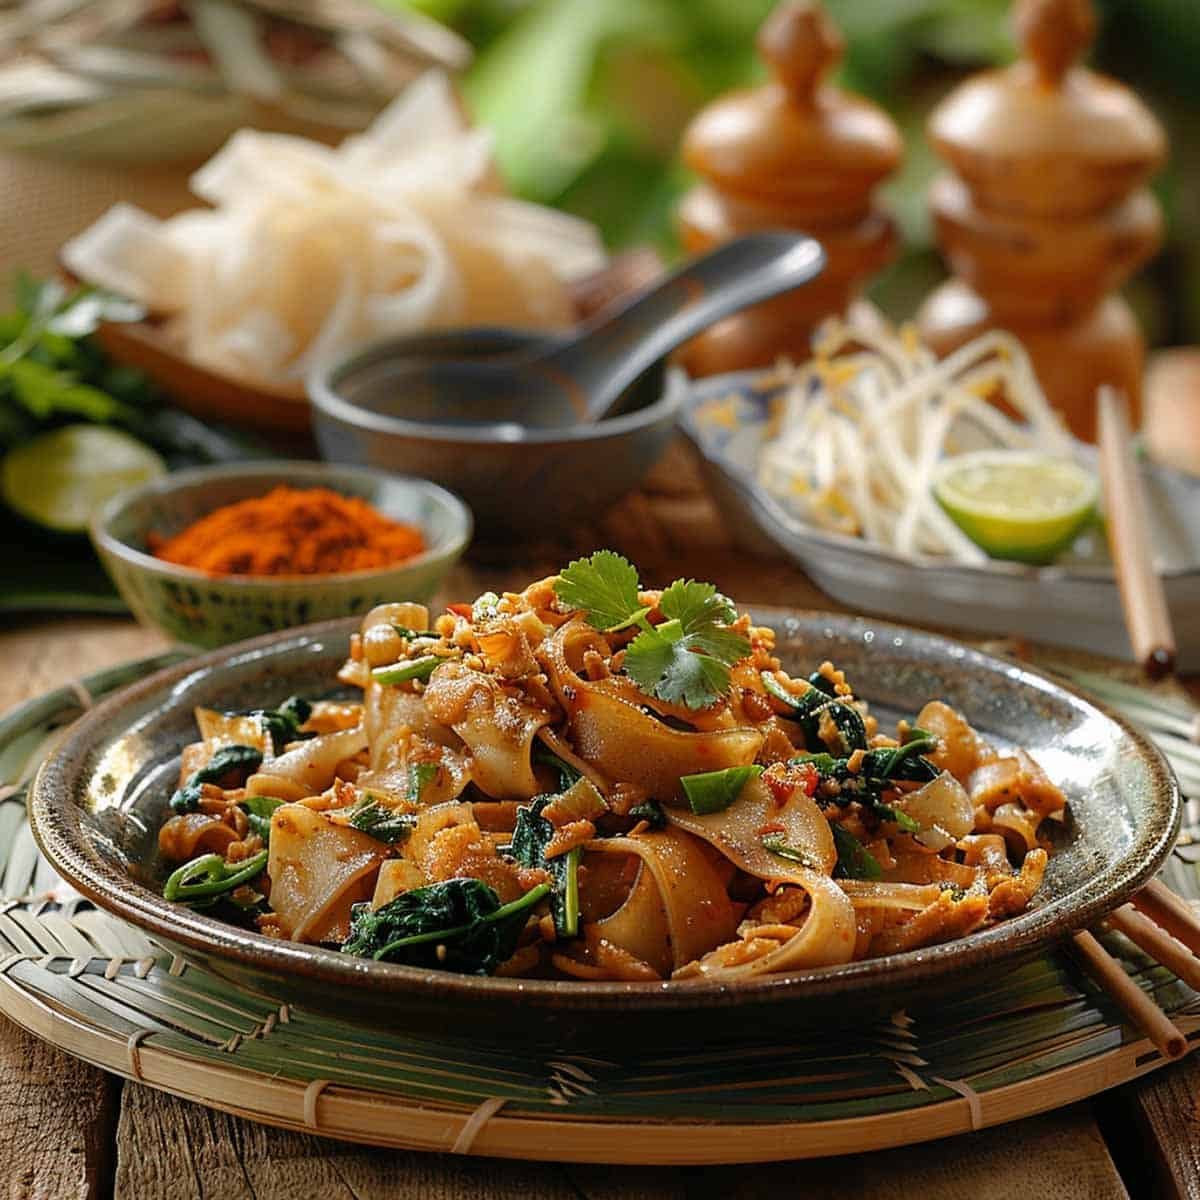 Plate of Pad See Ew (Thai Stir-Fried Noodles).